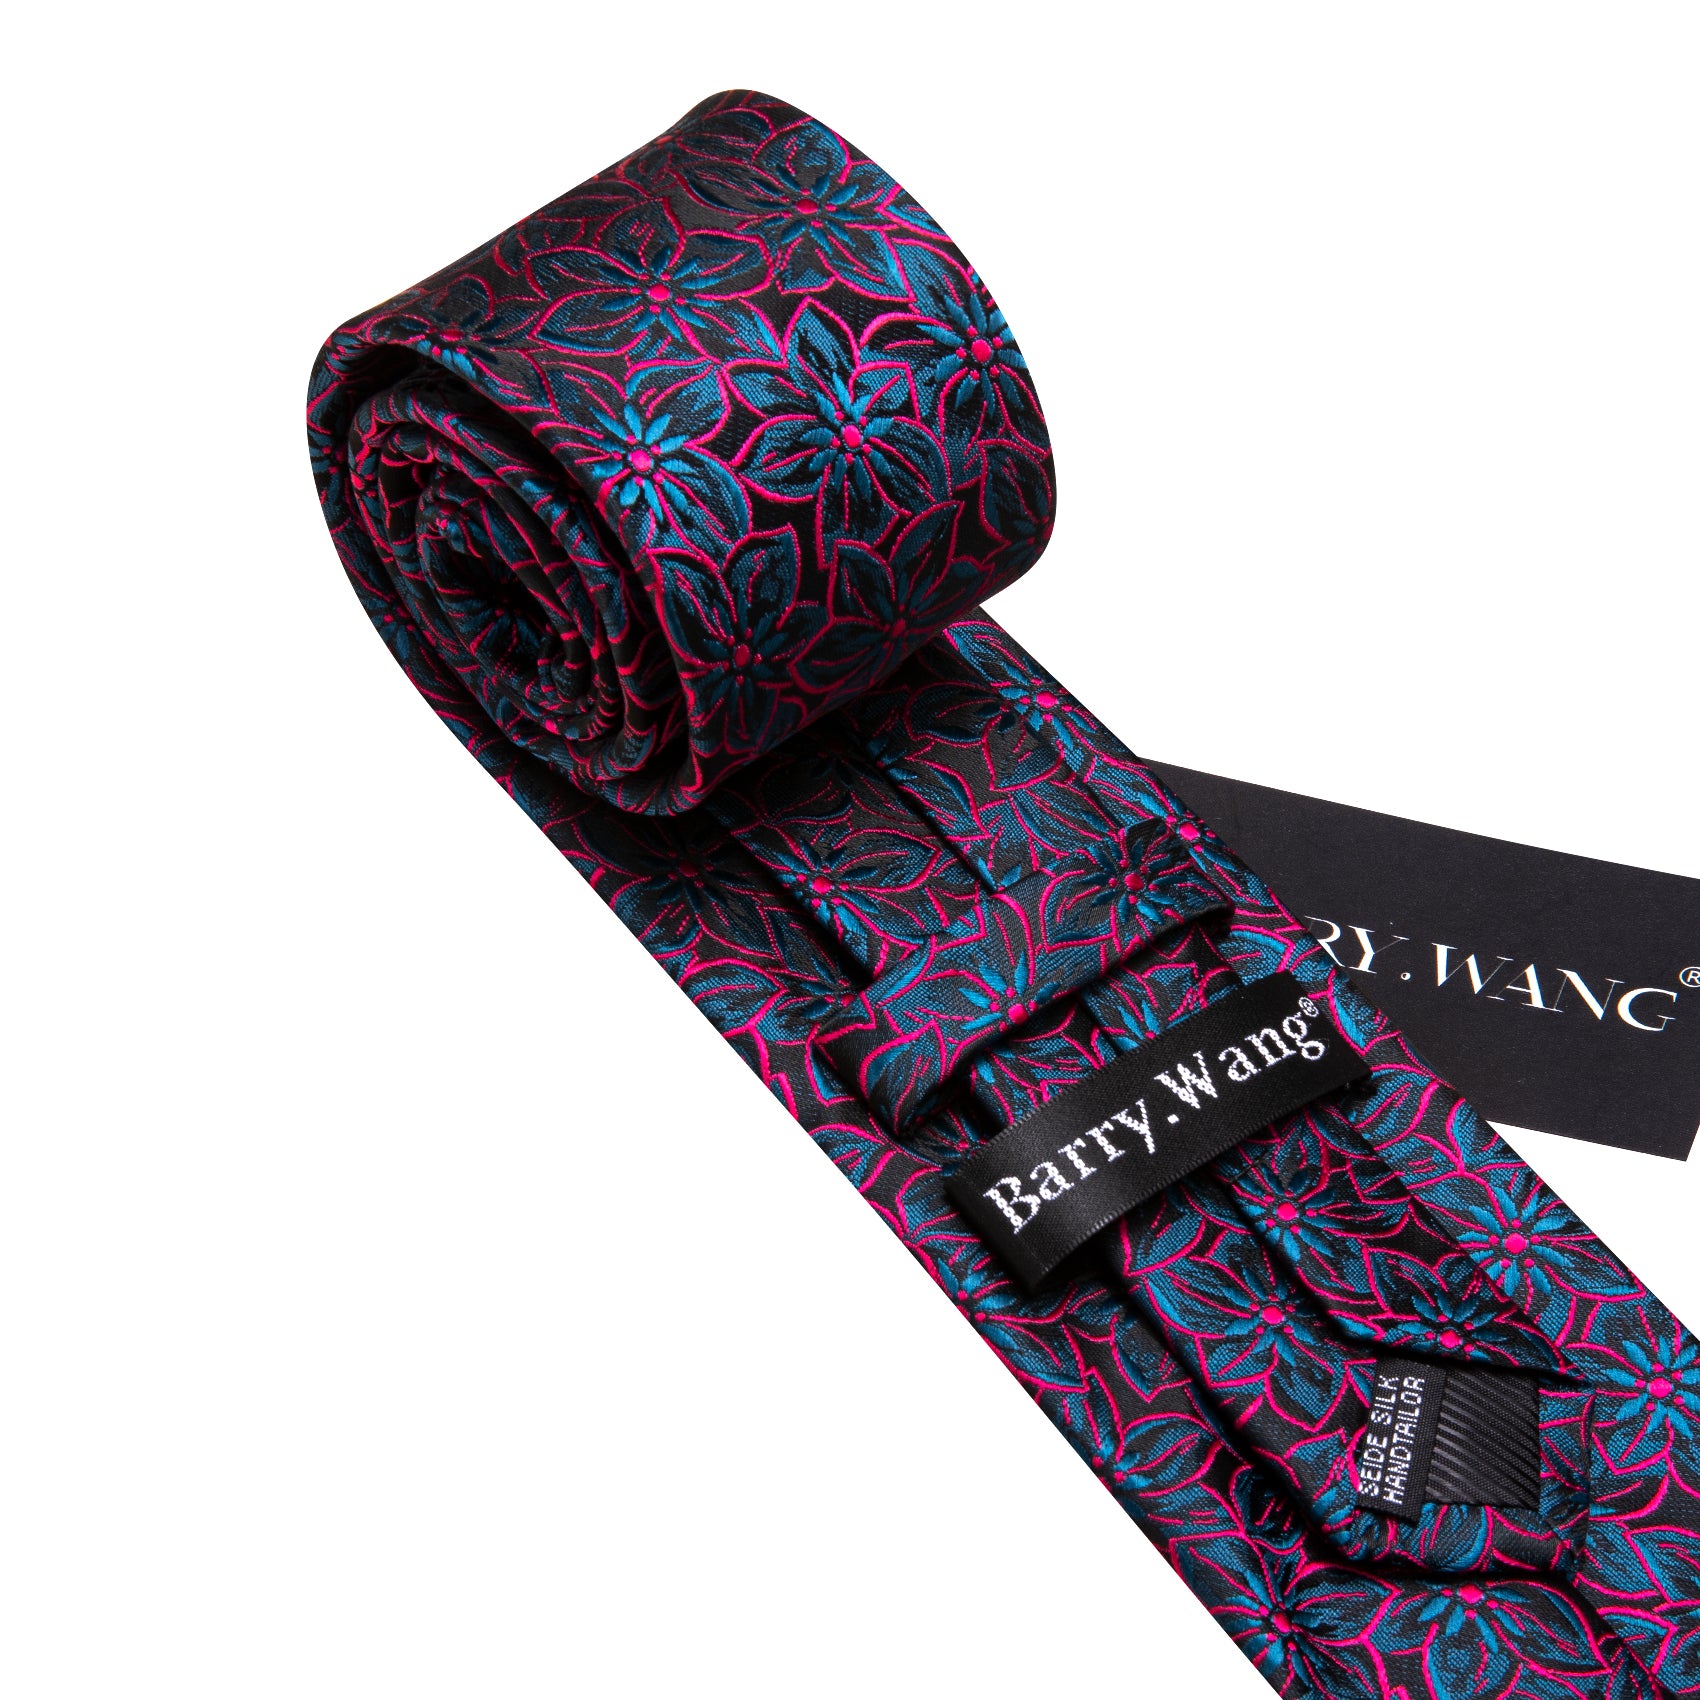 Red Blue Floral Silk Tie Pocket Square Cufflinks Set